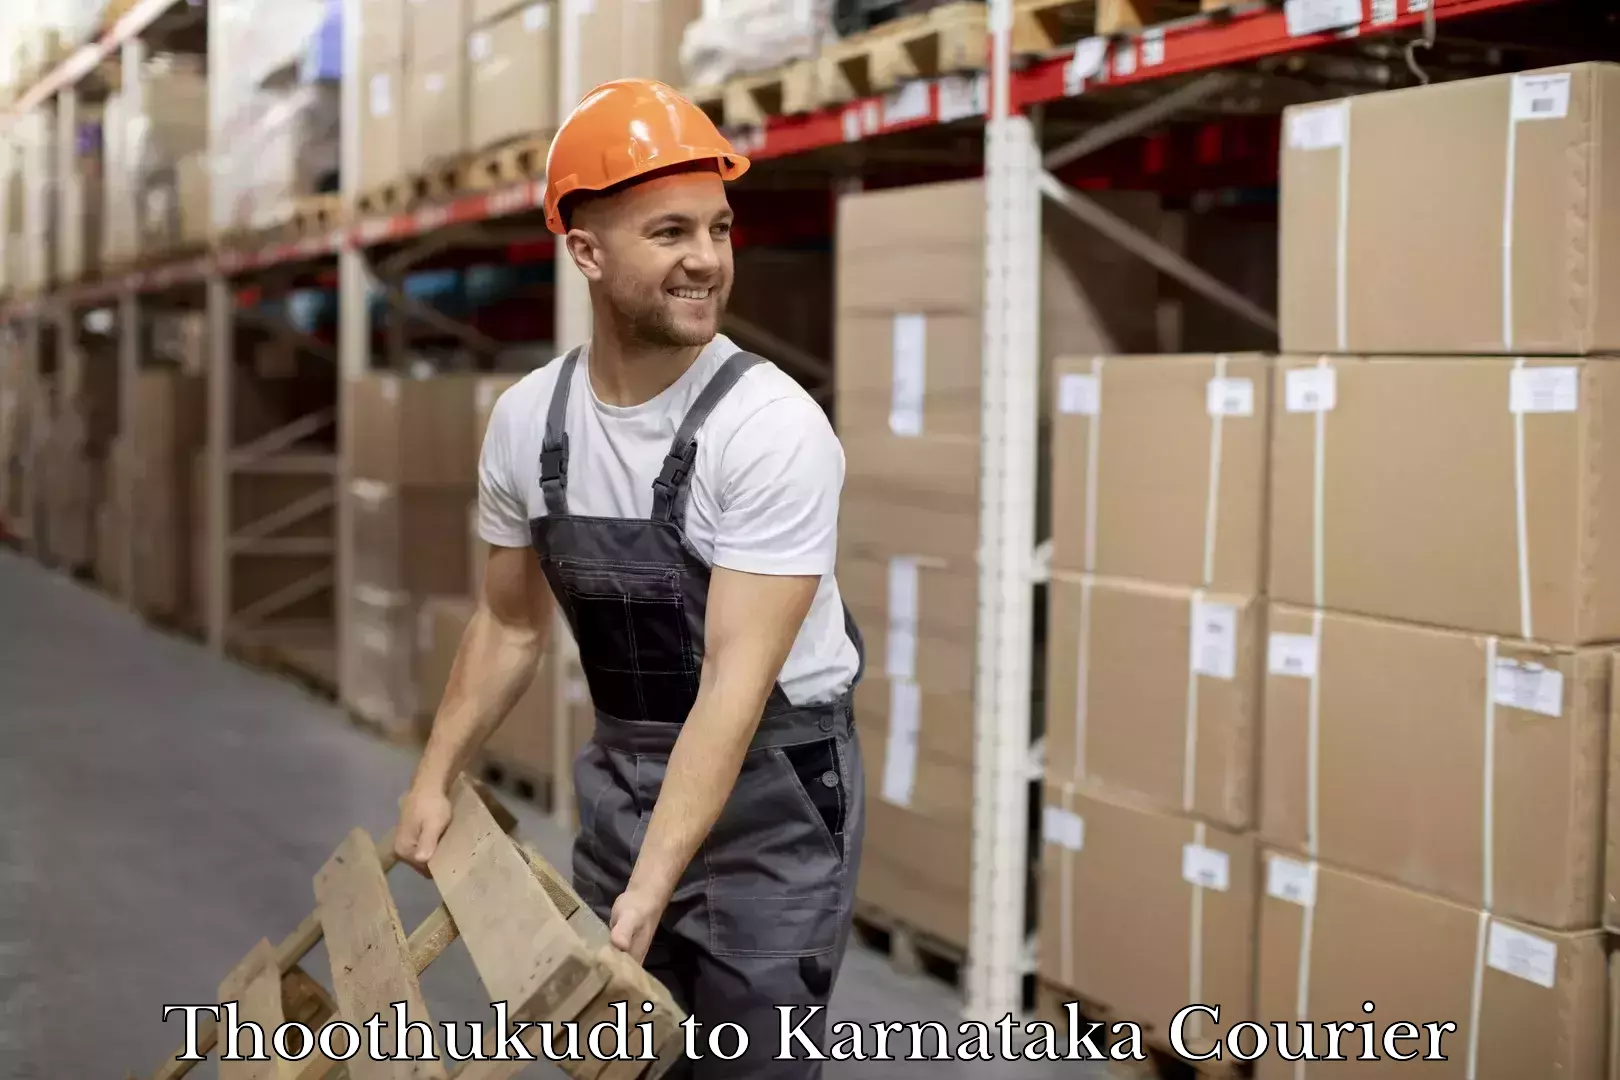 Speedy delivery service Thoothukudi to Karnataka